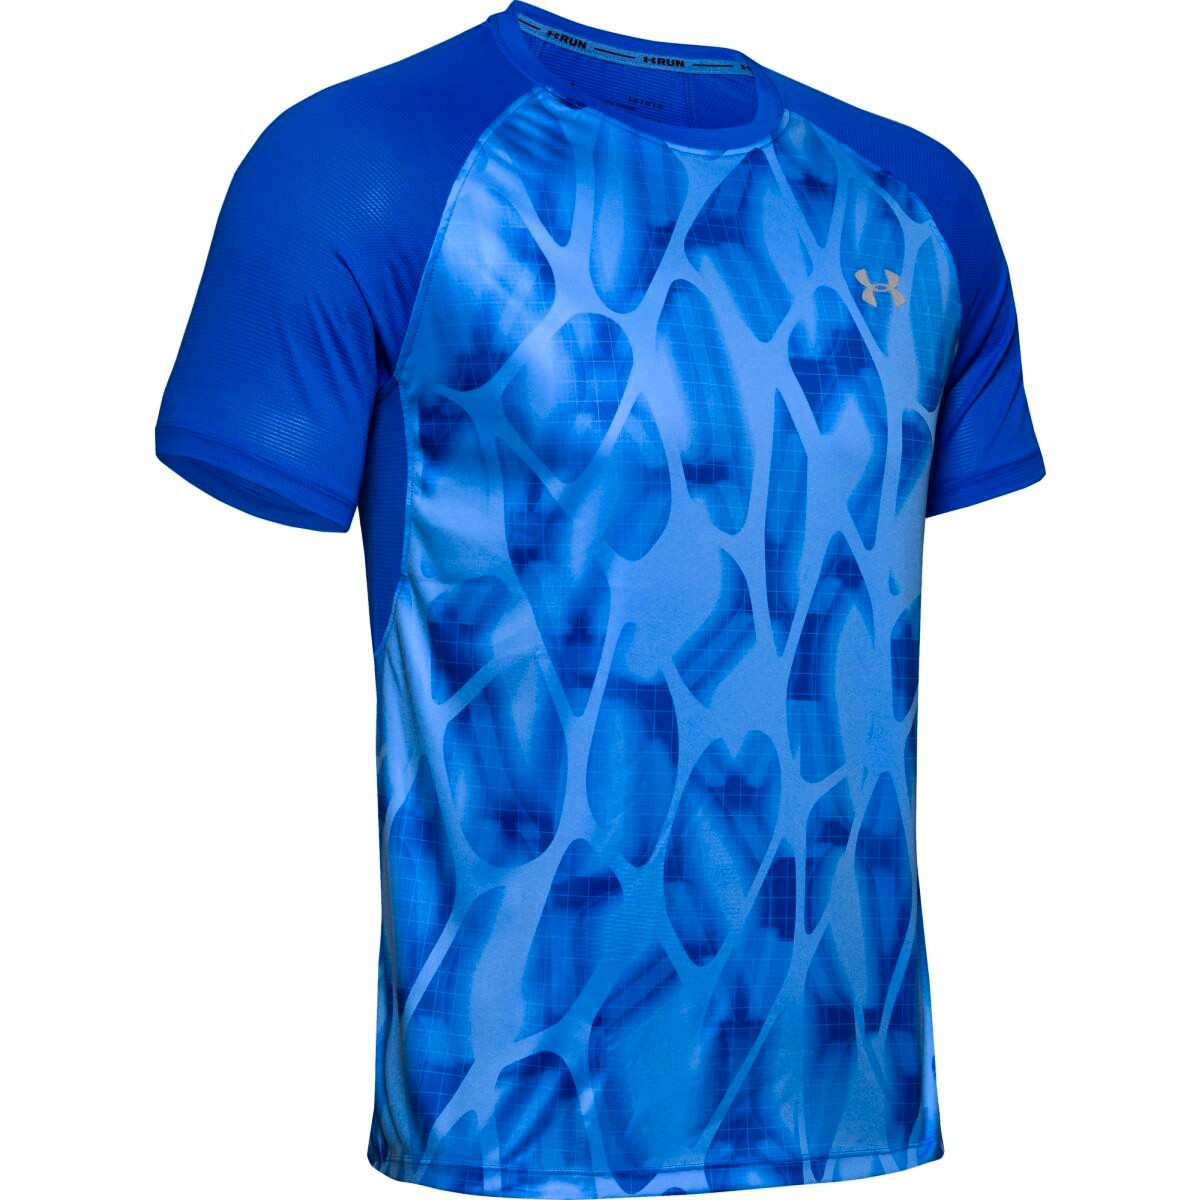 Pánské tričko Under Armour Qualifier ISO-Chill Printed modré